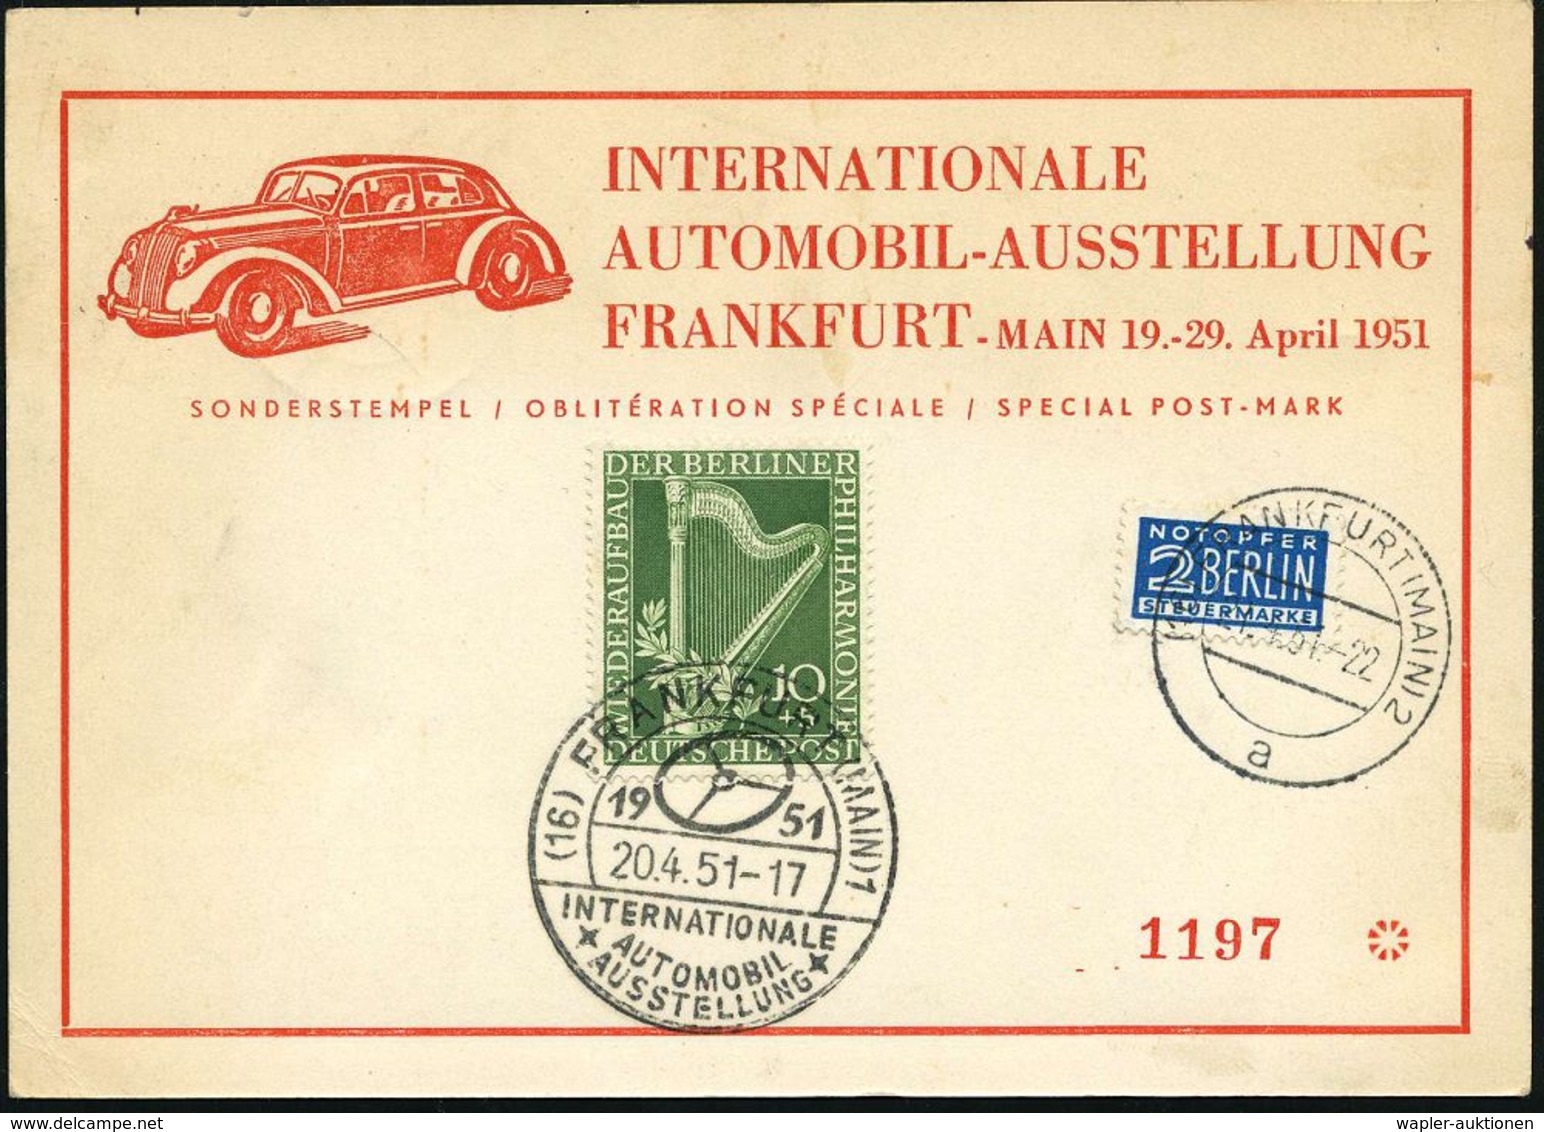 AUTO-, MOTORRAD-AUSSTELLUNGEN : (16) FRANKFURT (MAIN)1/ INT./ AUTOMOBIL-/ AUSSTELLUNG 1951 (23.4.) SSt (PKW-Steuerrad) K - Cars